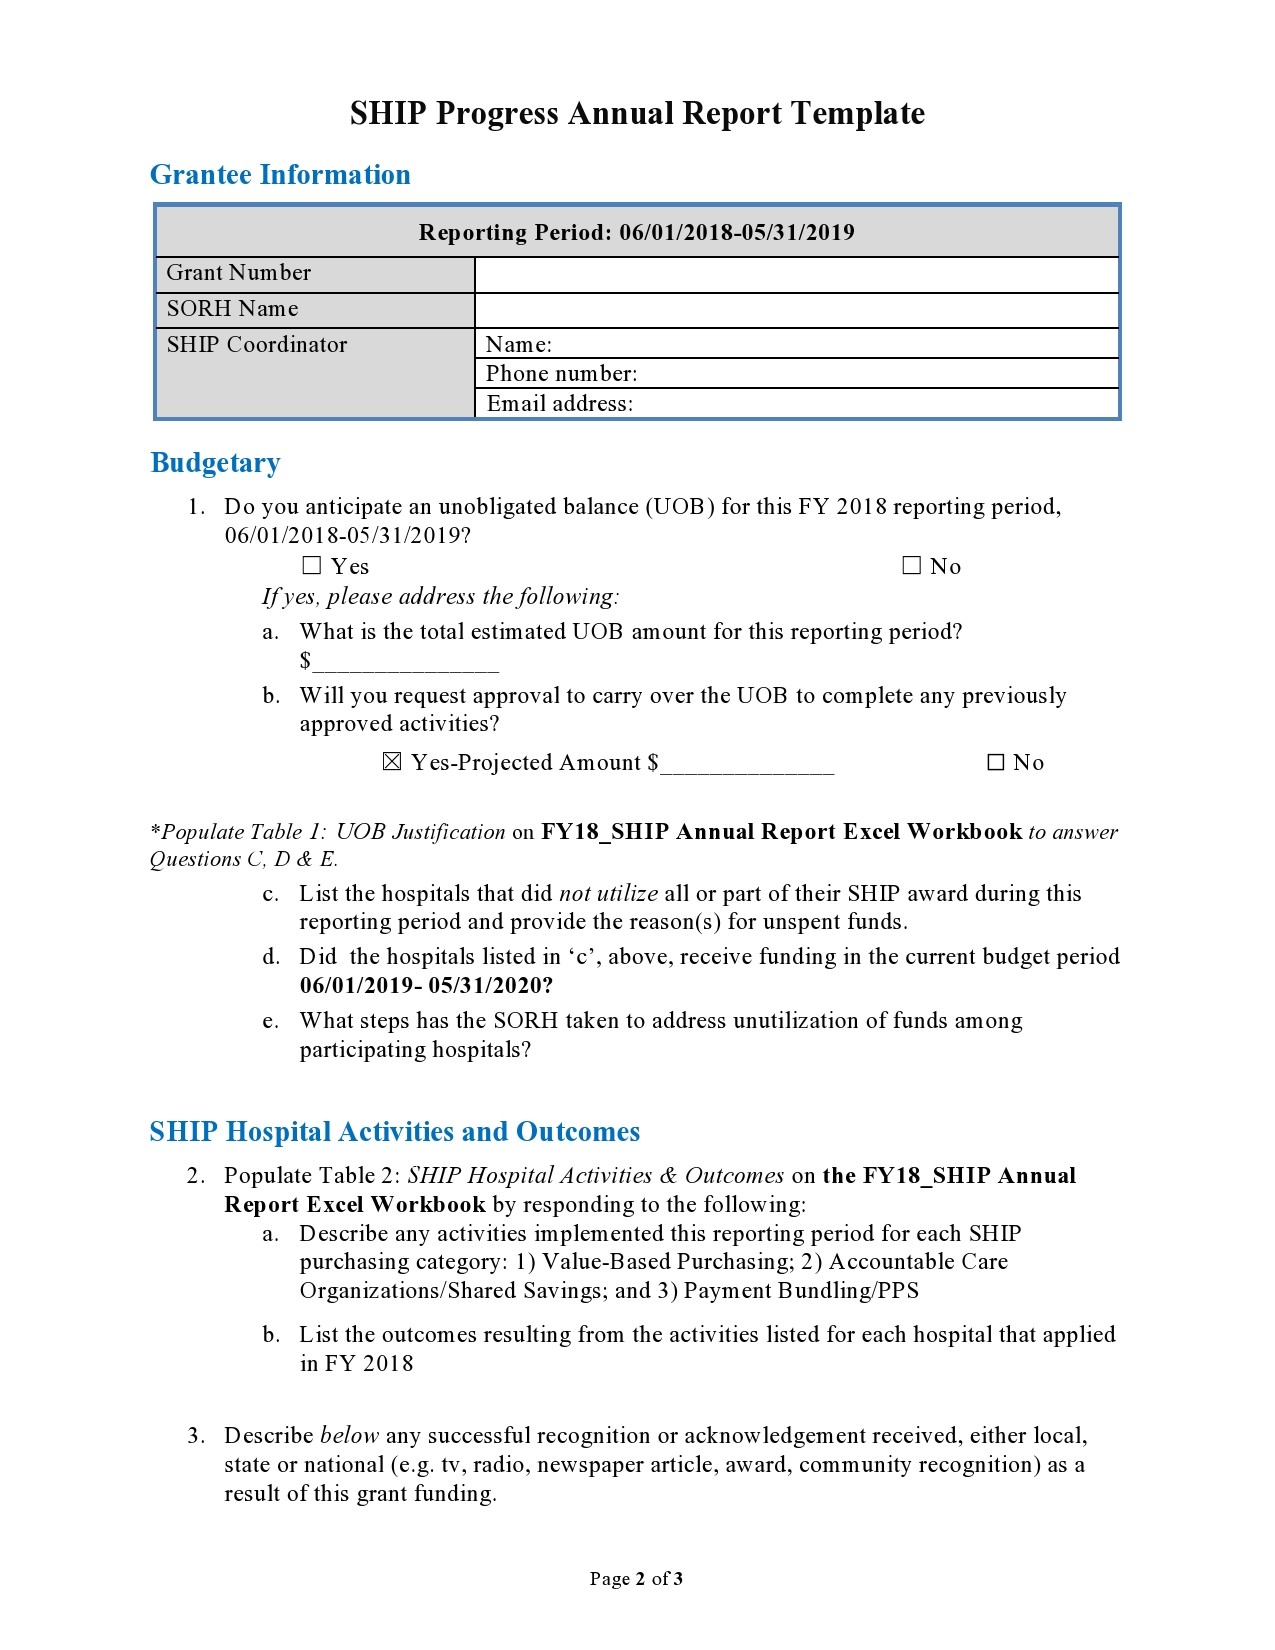 49 Free Annual Report Templates [LLC, Nonprofit..] ᐅ TemplateLab